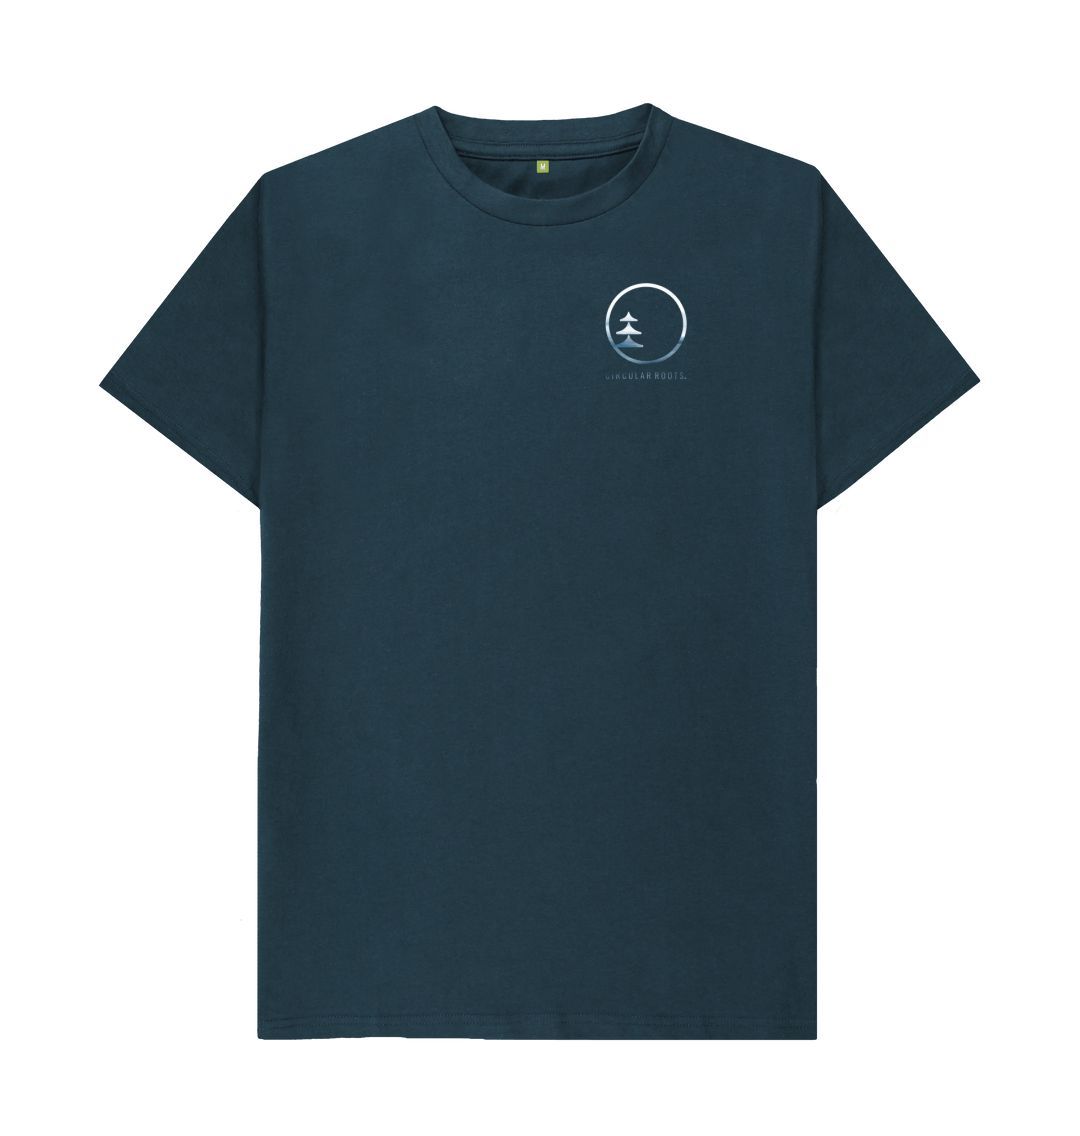 Denim Blue Circular Basics - Small Ocean logo tee